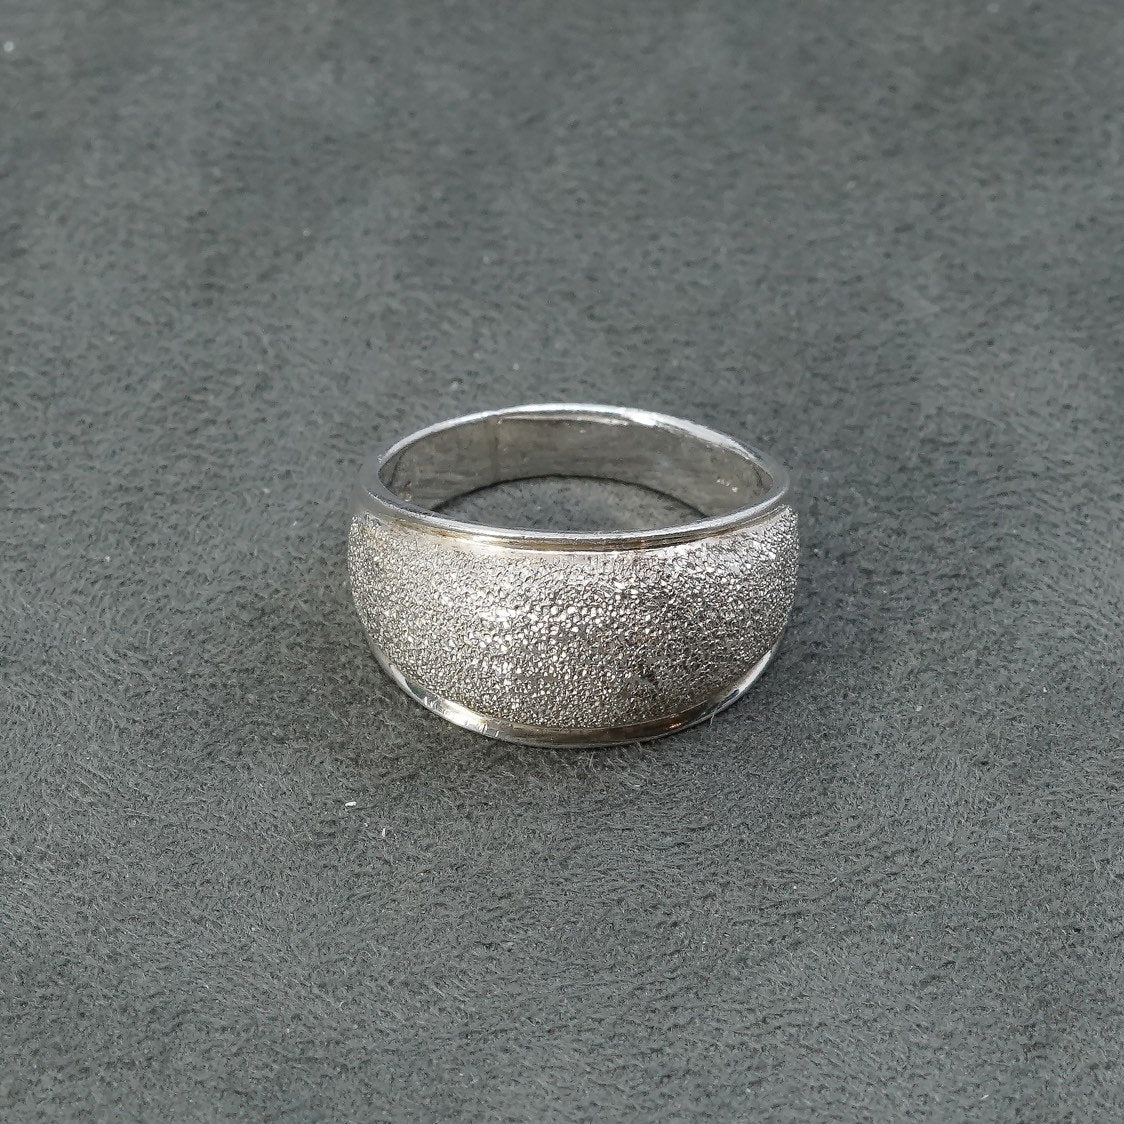 sz 9.25, vtg Sterling silver handmade ring, Mexican 925 band w/ Matt surface